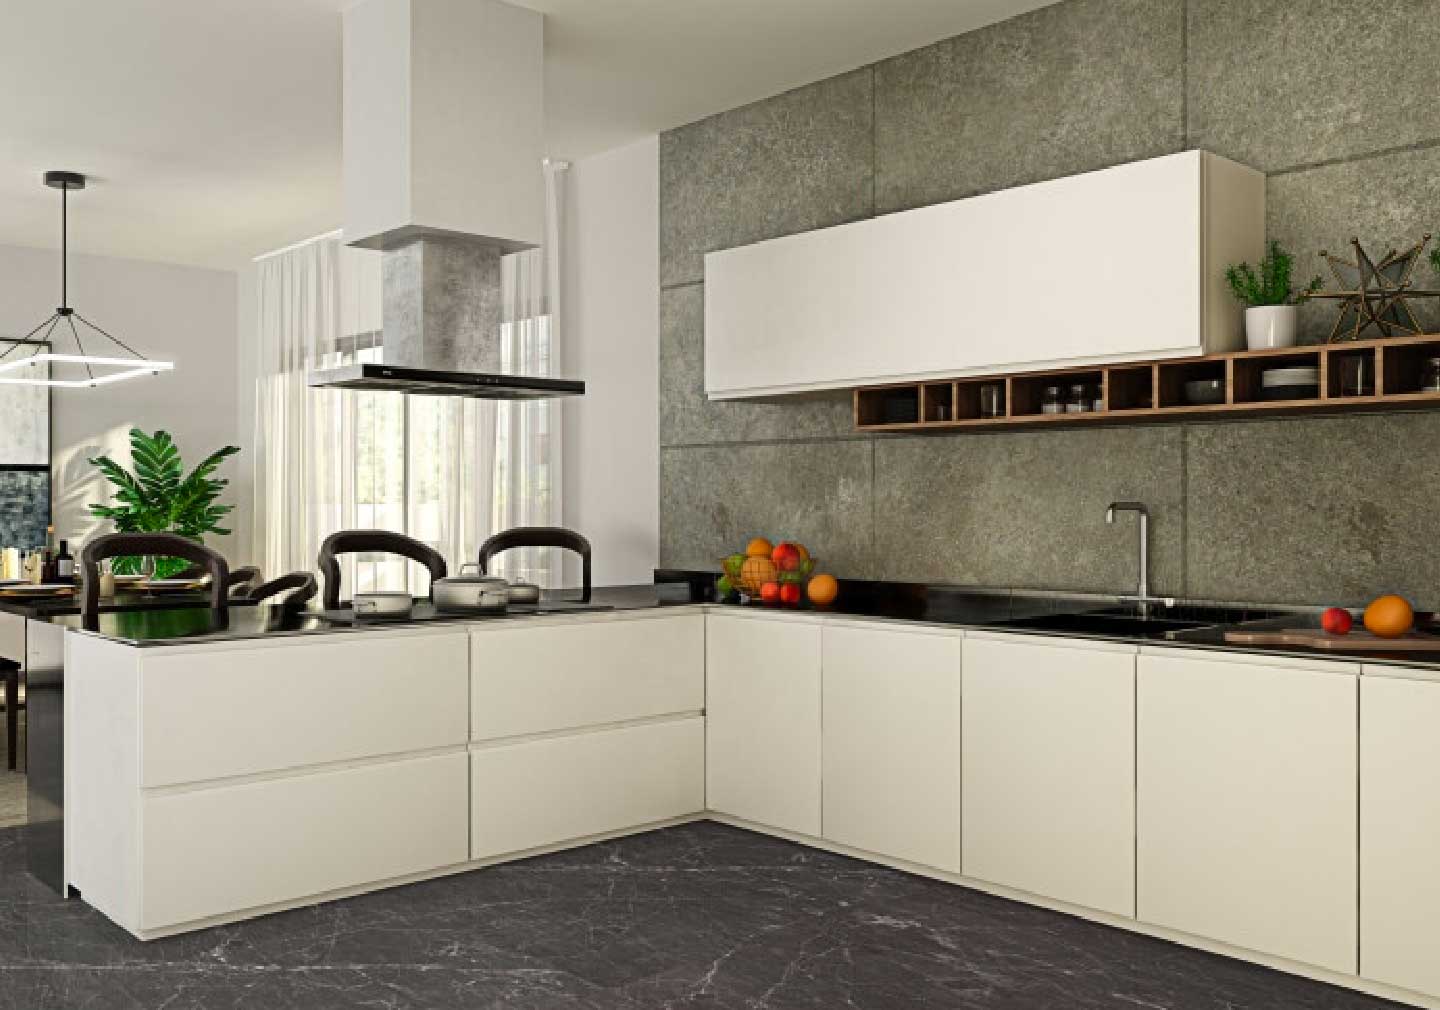 All-in-White Kitchen Interiors - Kitchen interior design